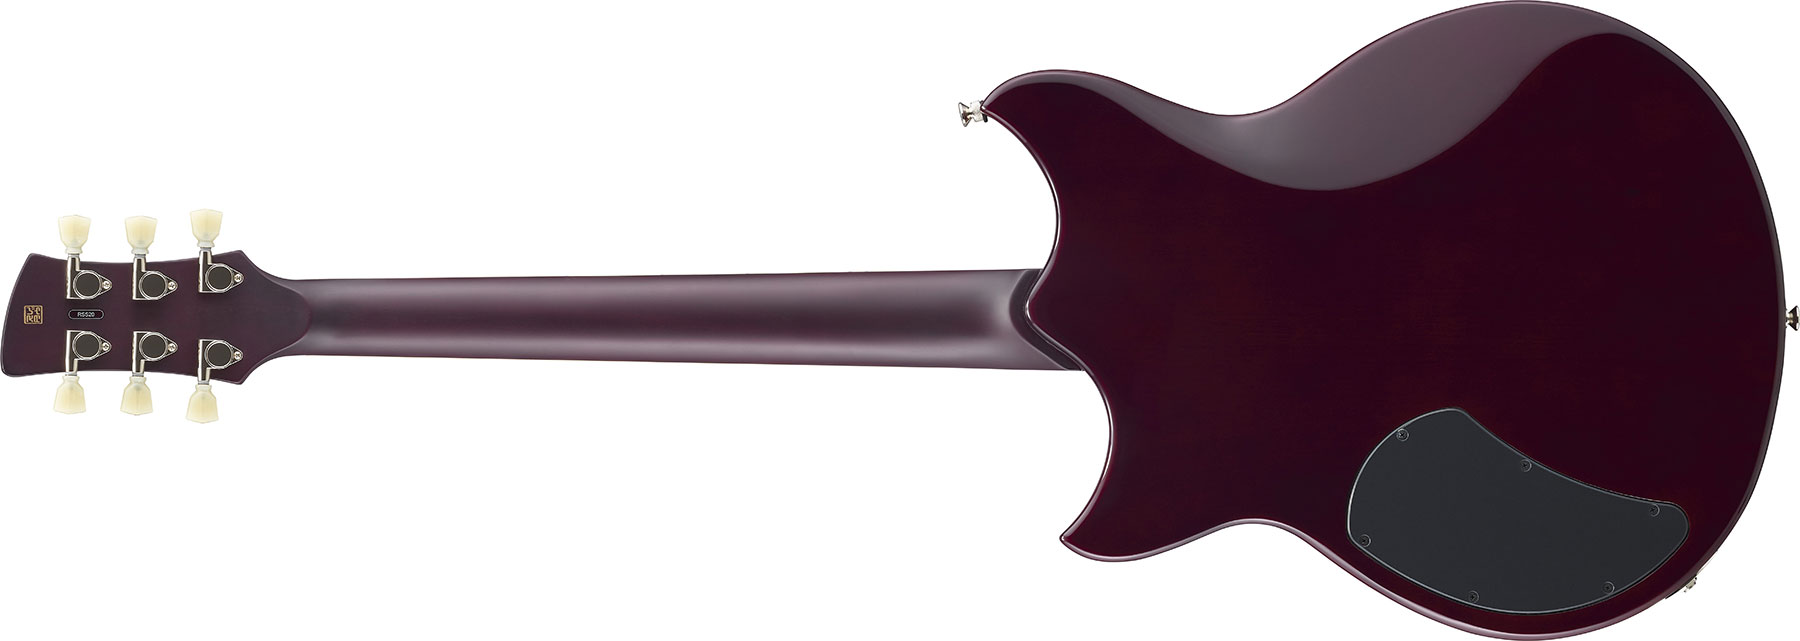 Yamaha Rss20 Revstar Standard Hh Ht Rw - Black - Double cut electric guitar - Variation 2